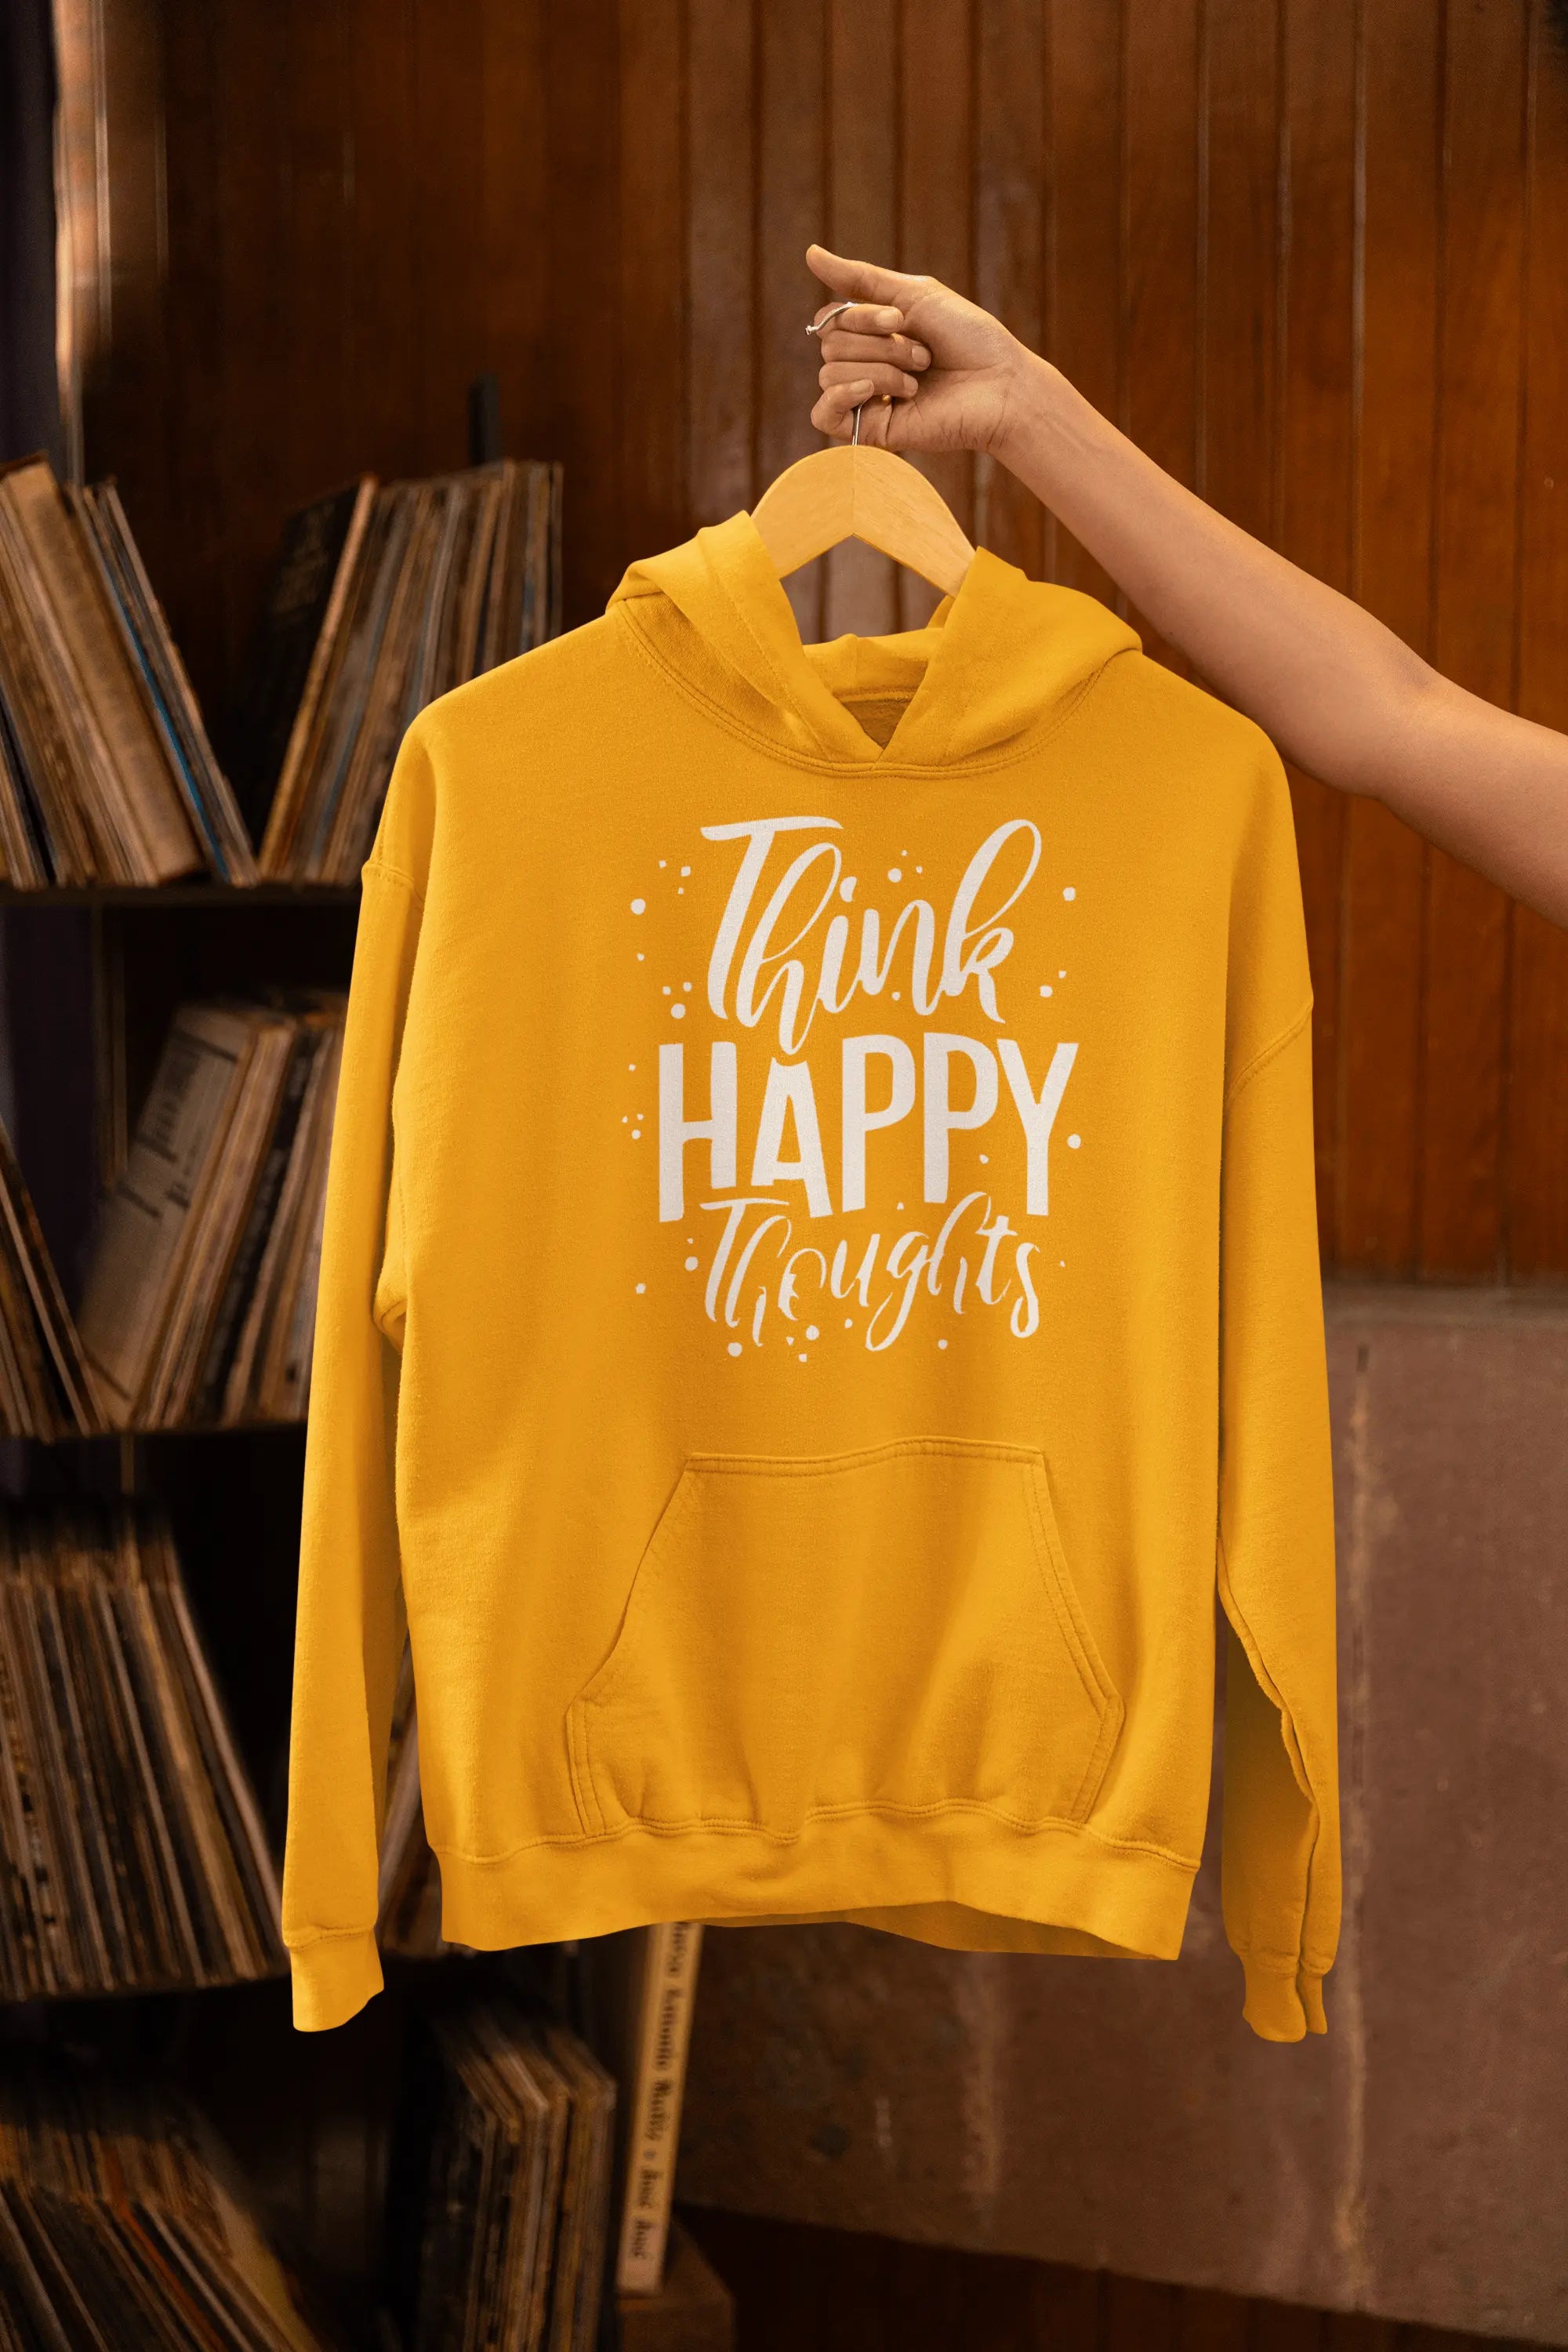 Think Happy Thoughts Sweatshirt - Image #3